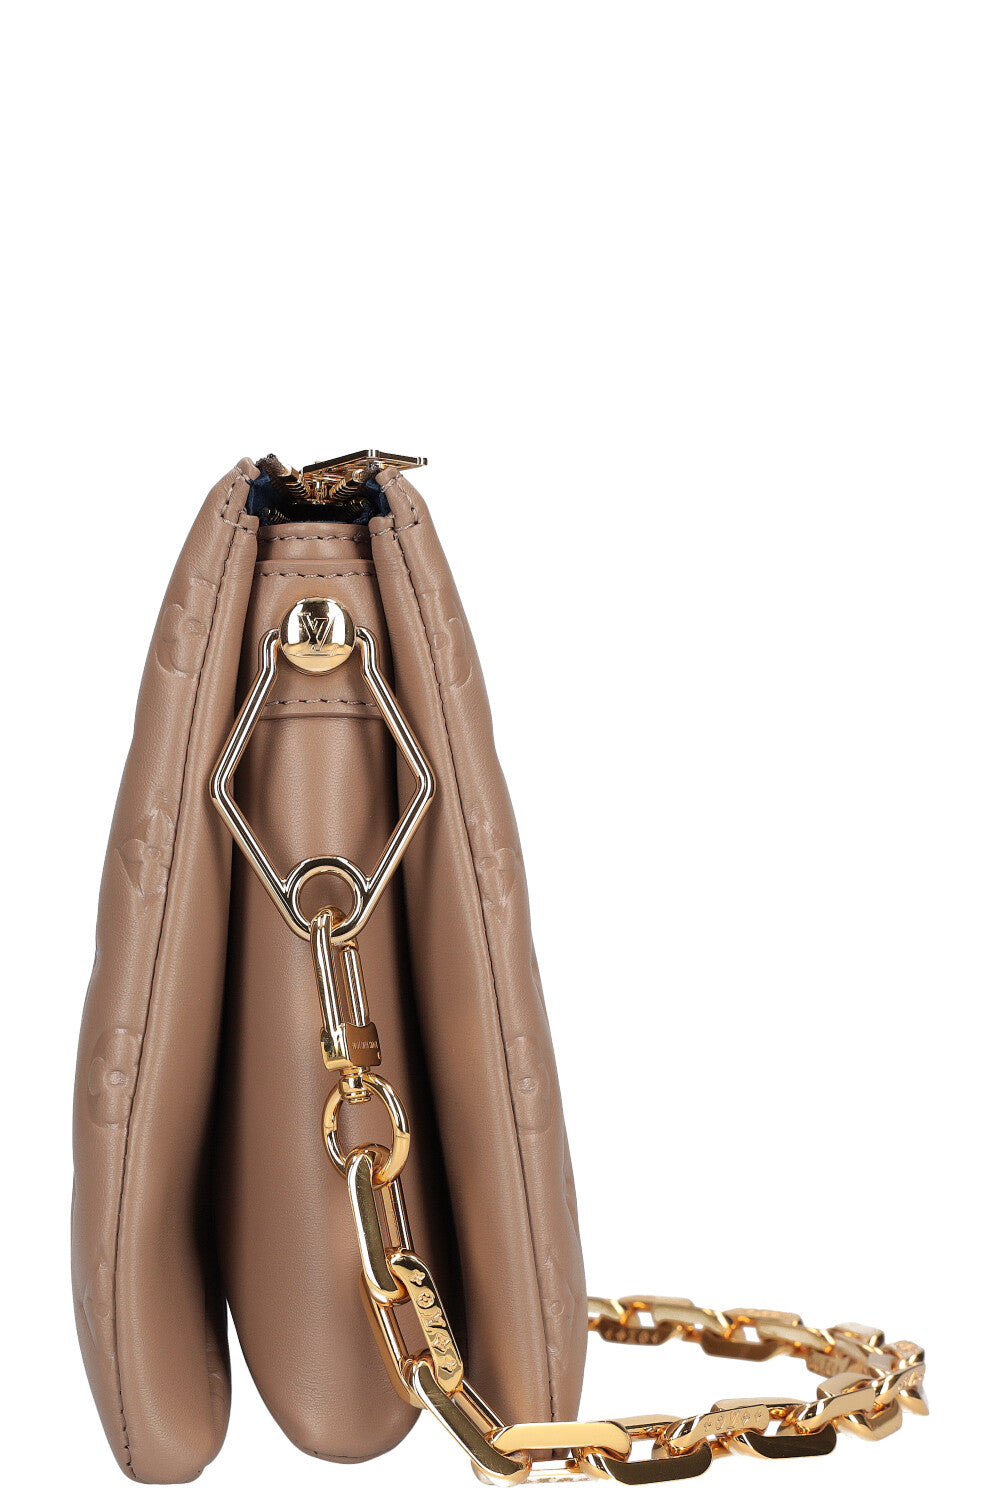 Louis Vuitton (LV) Coussin PM H27 handbag in taupe color